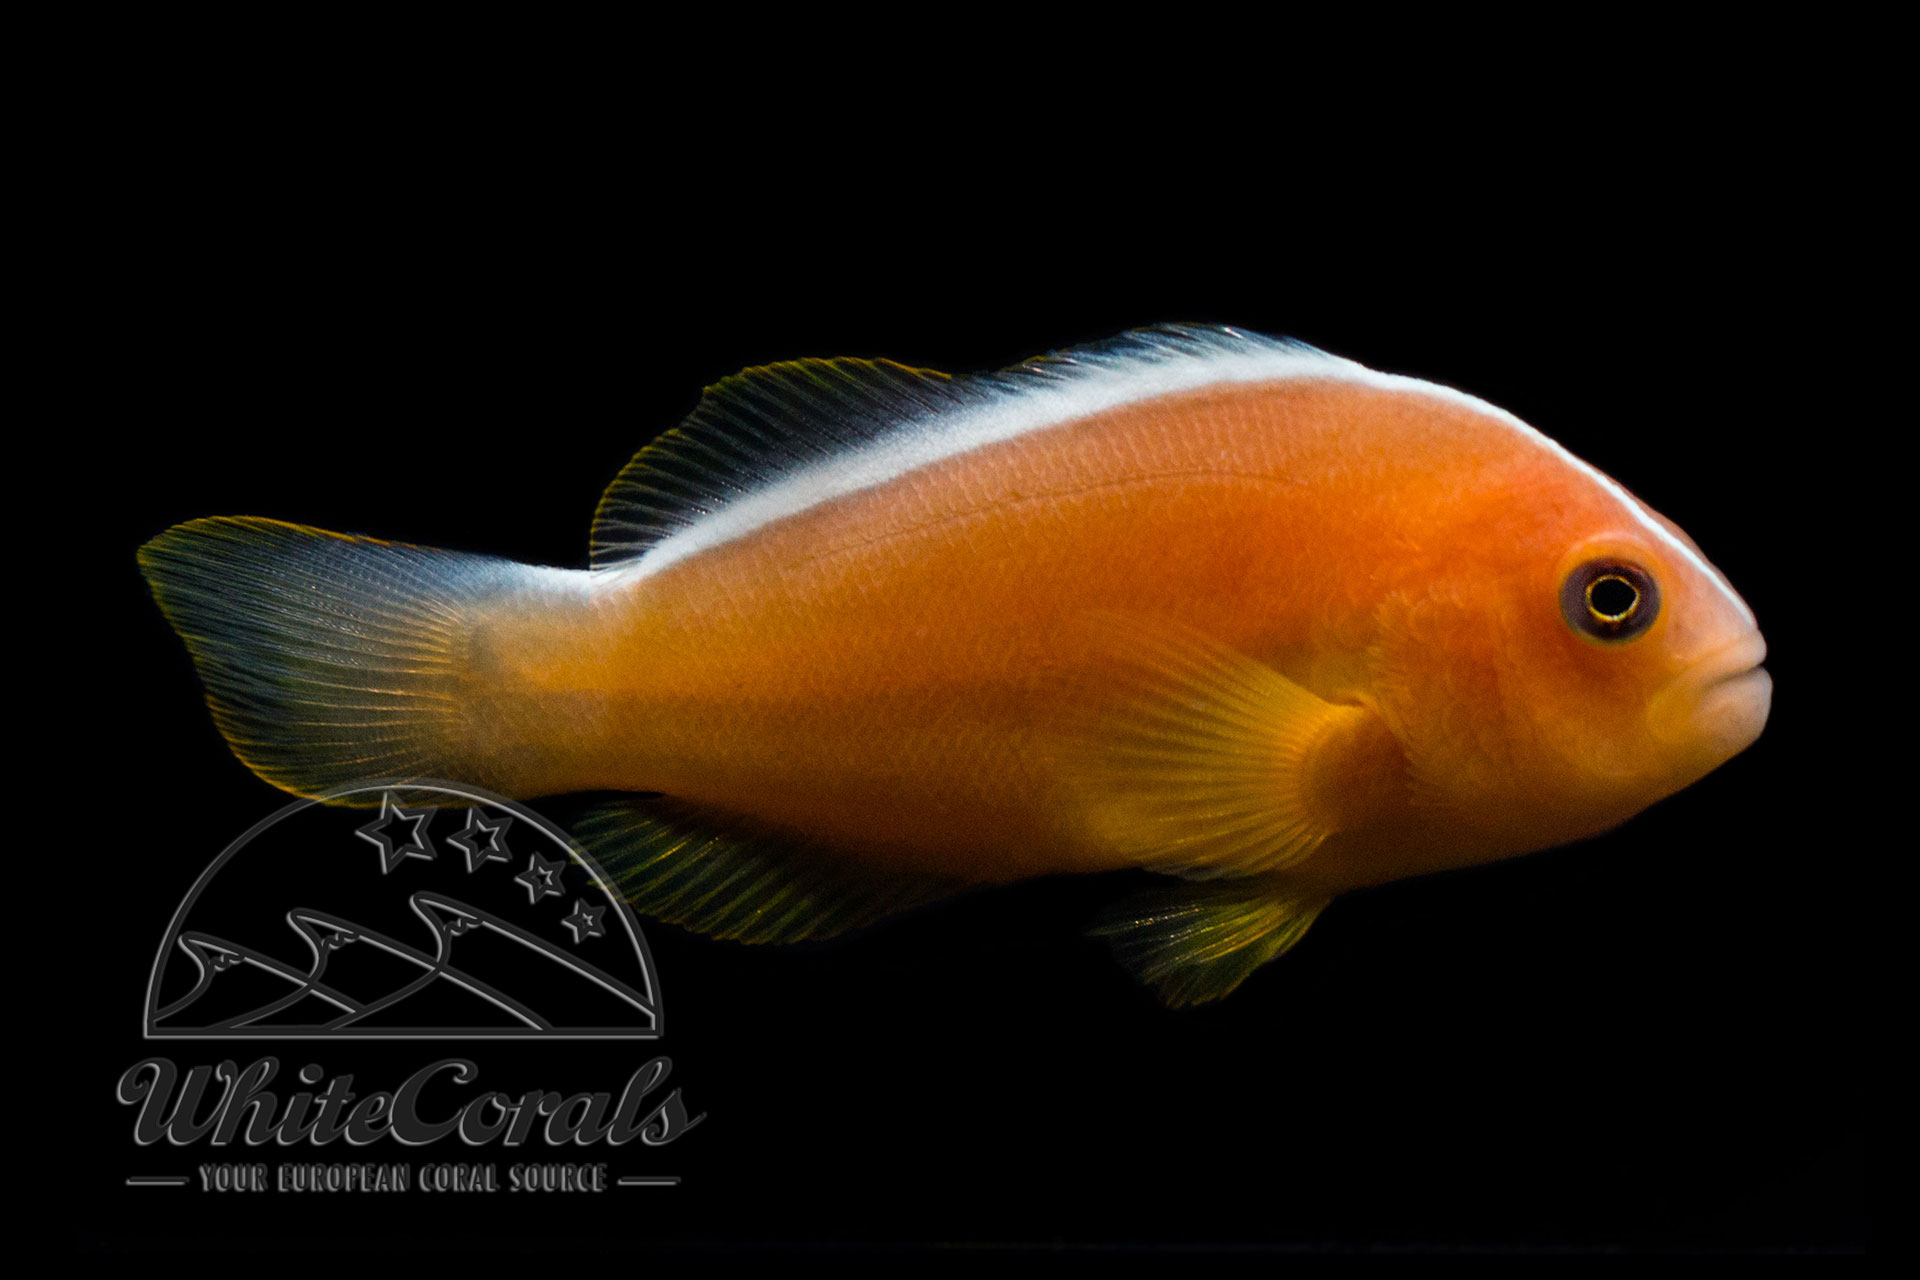 Amphiprion akallopisos - Skunk Clownfish